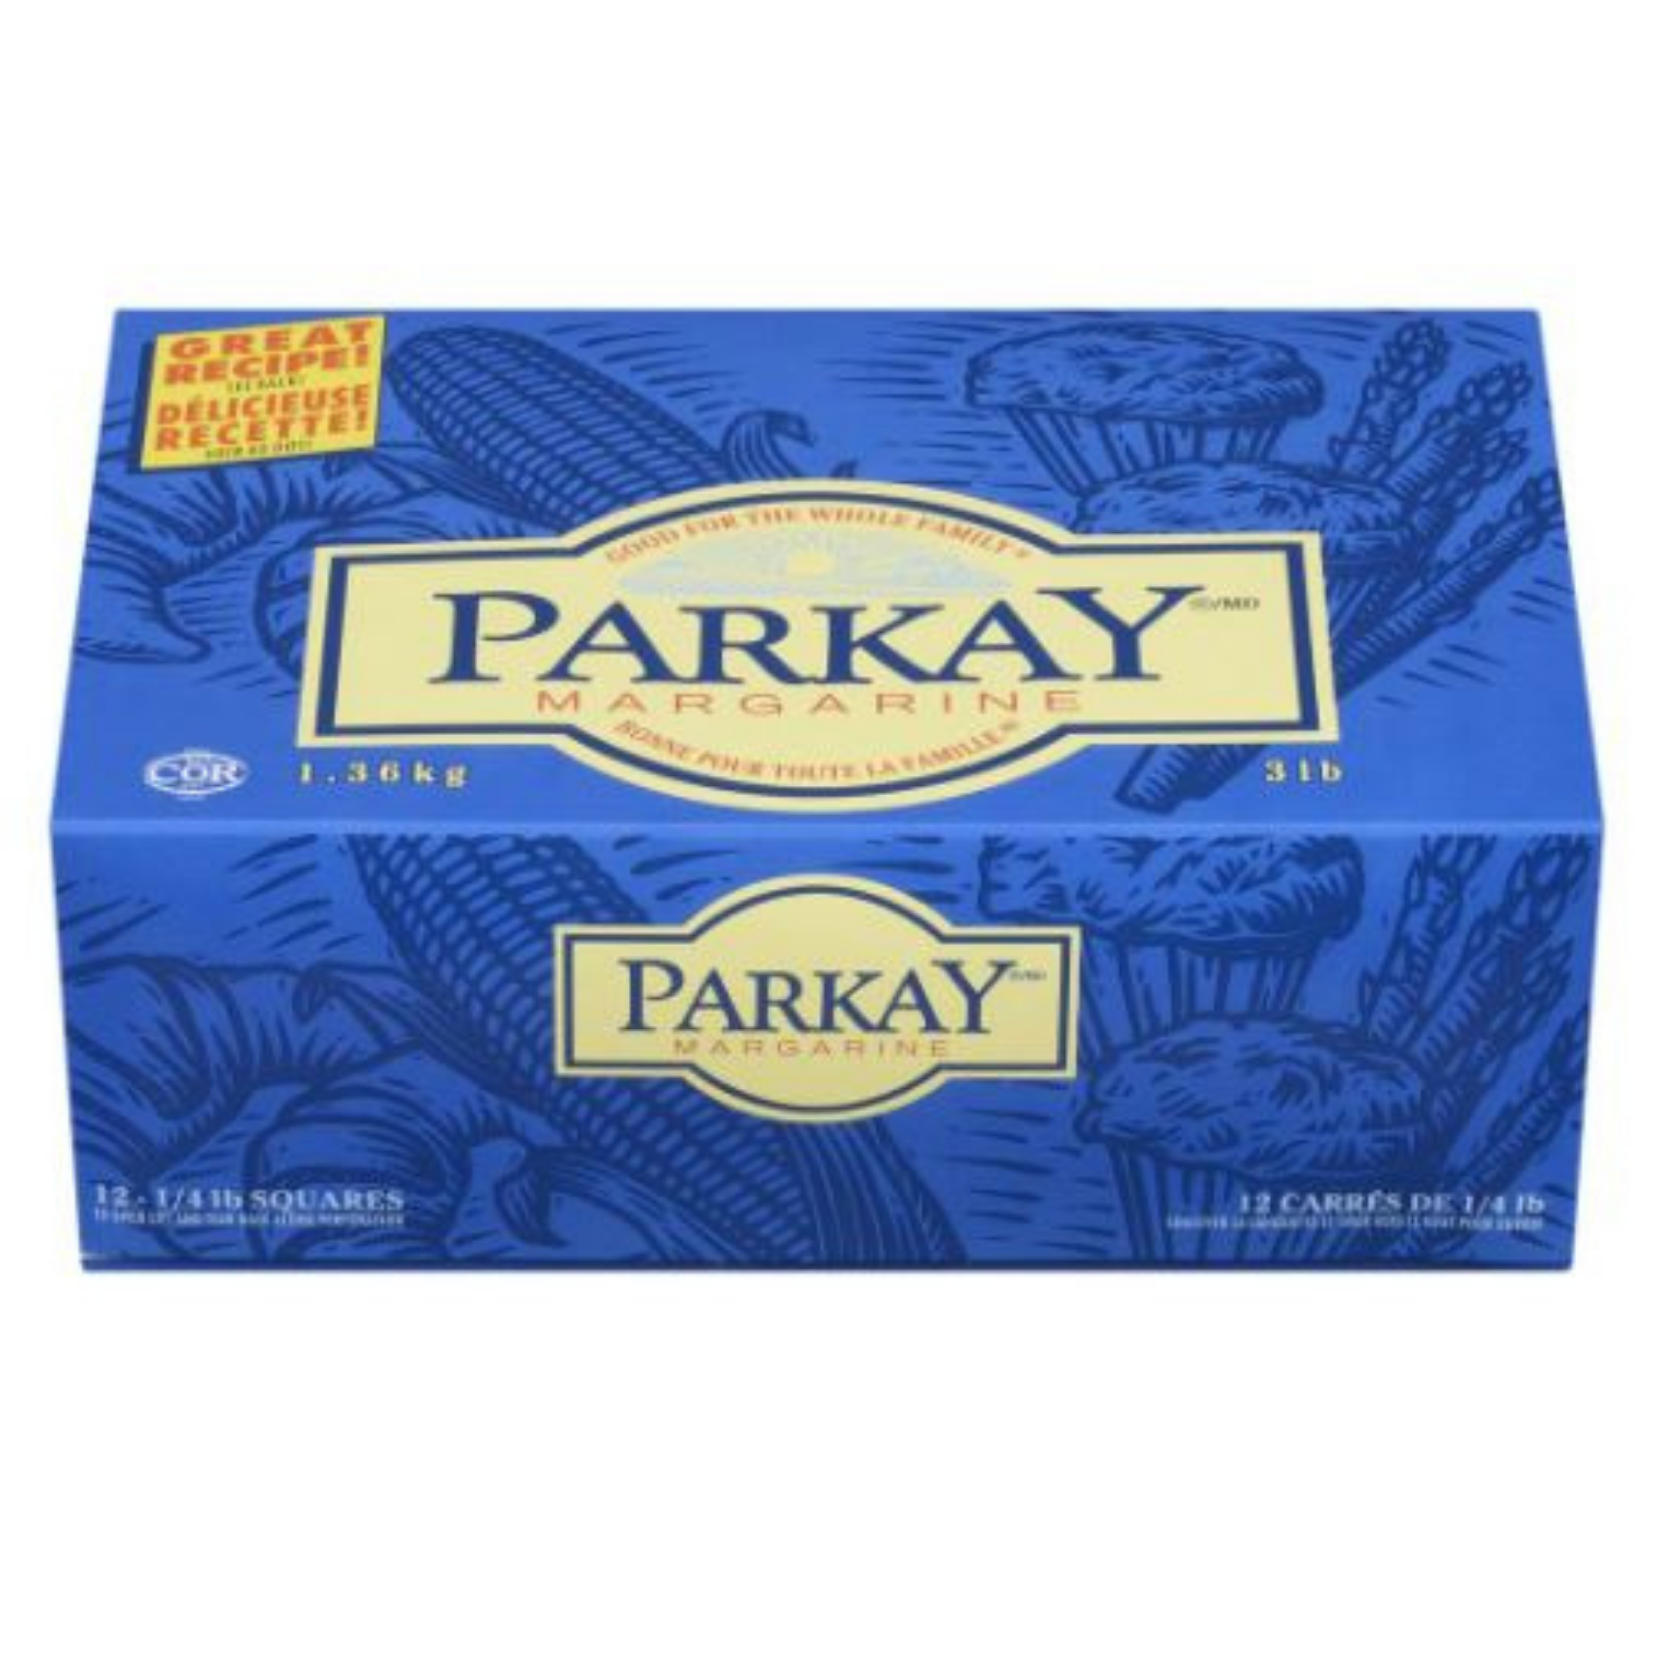 Parkay  Margarine Squares 1.36kg